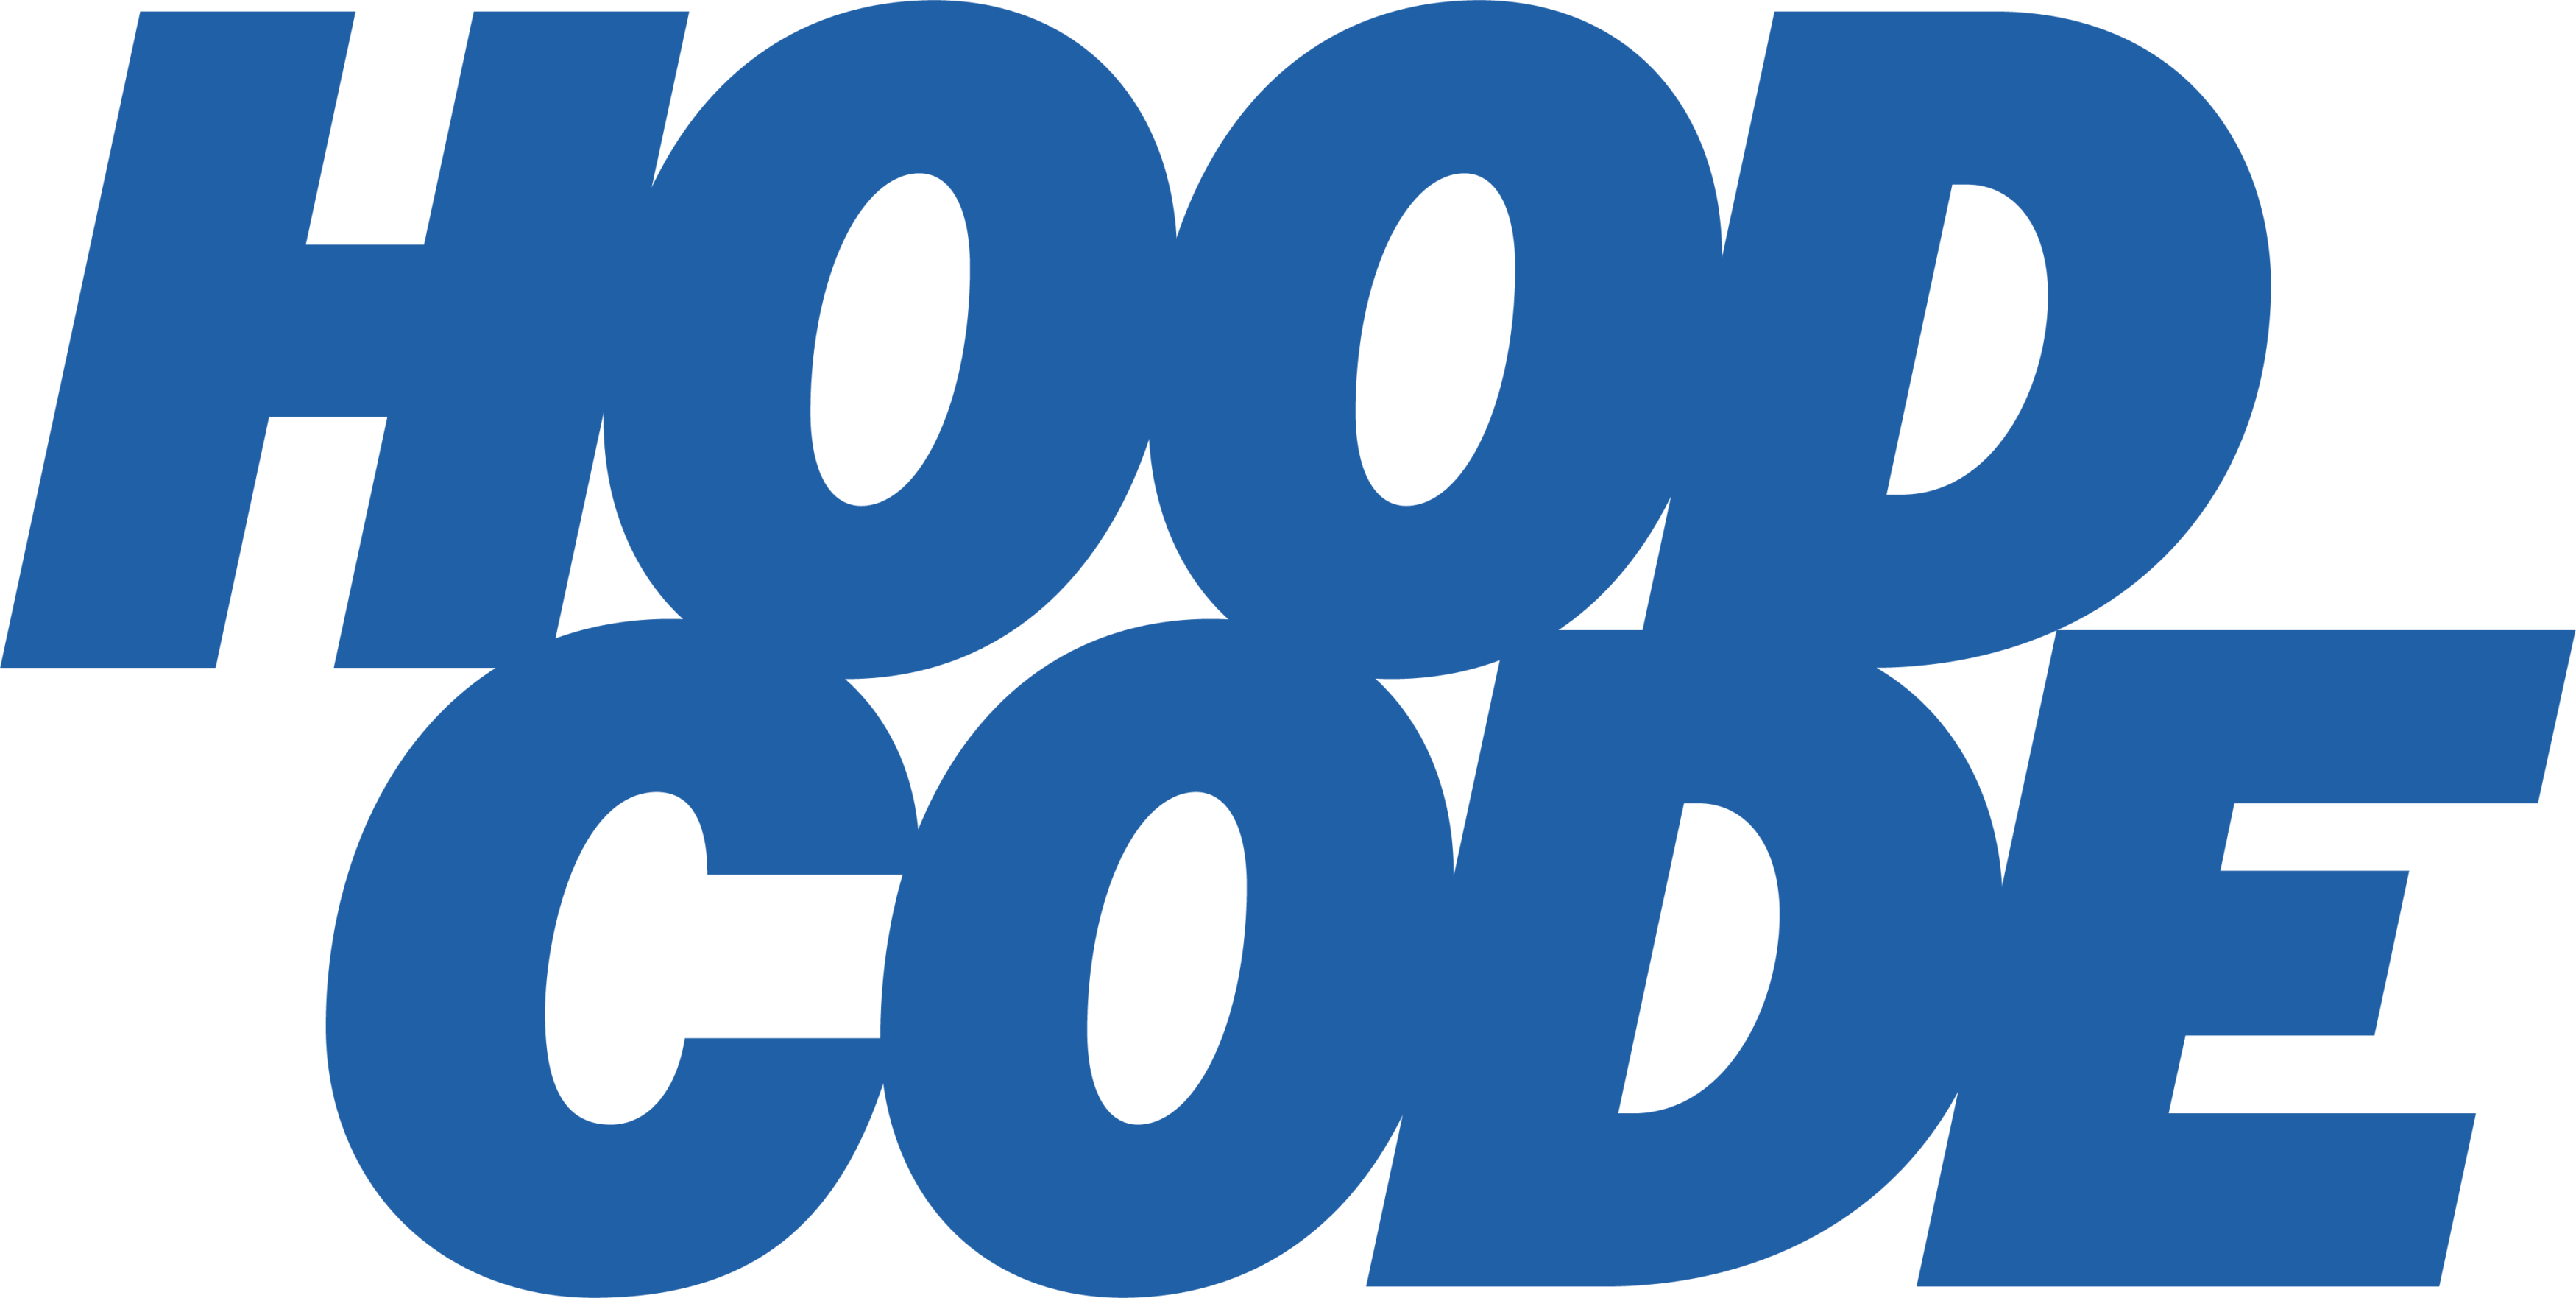 Hood Code logo